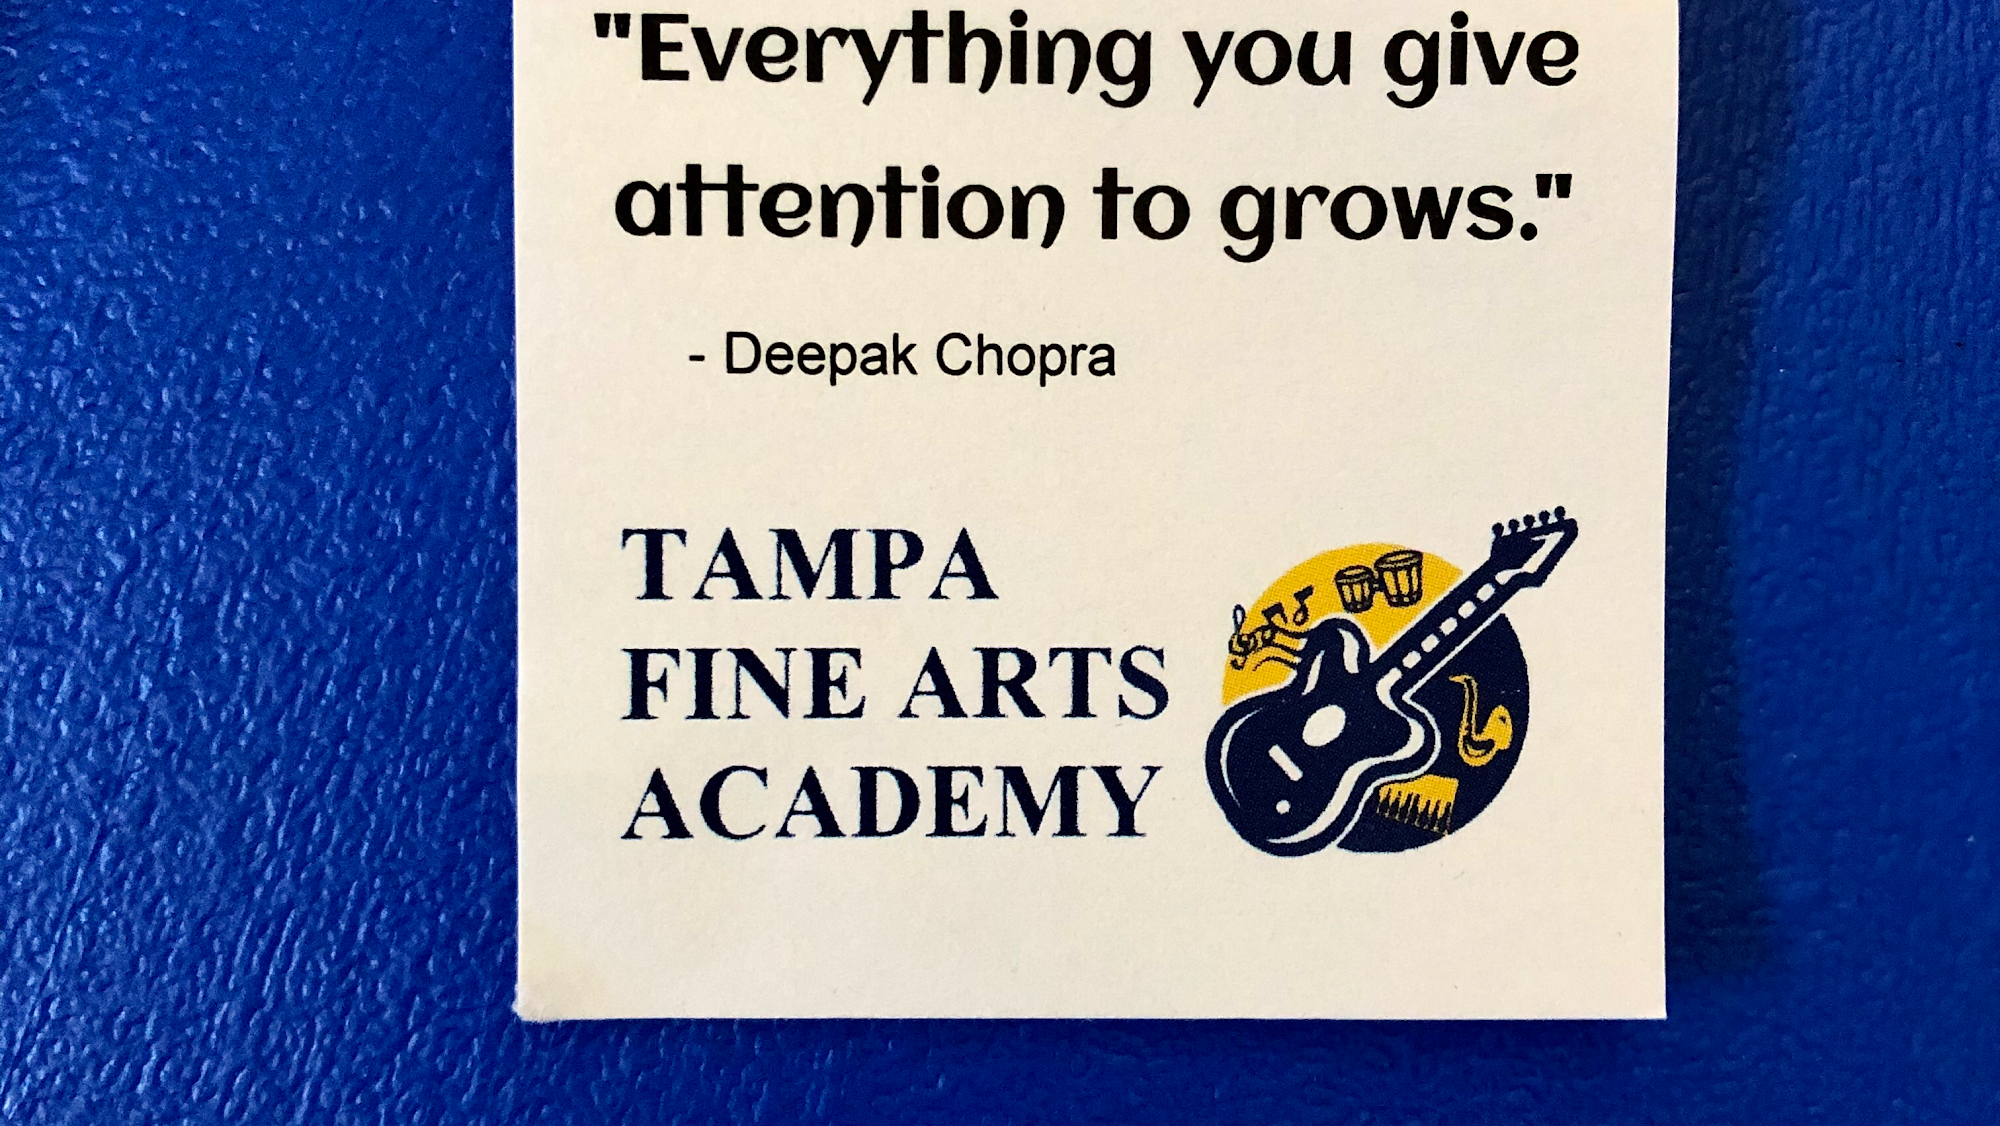 Tampa Fine Arts Academy